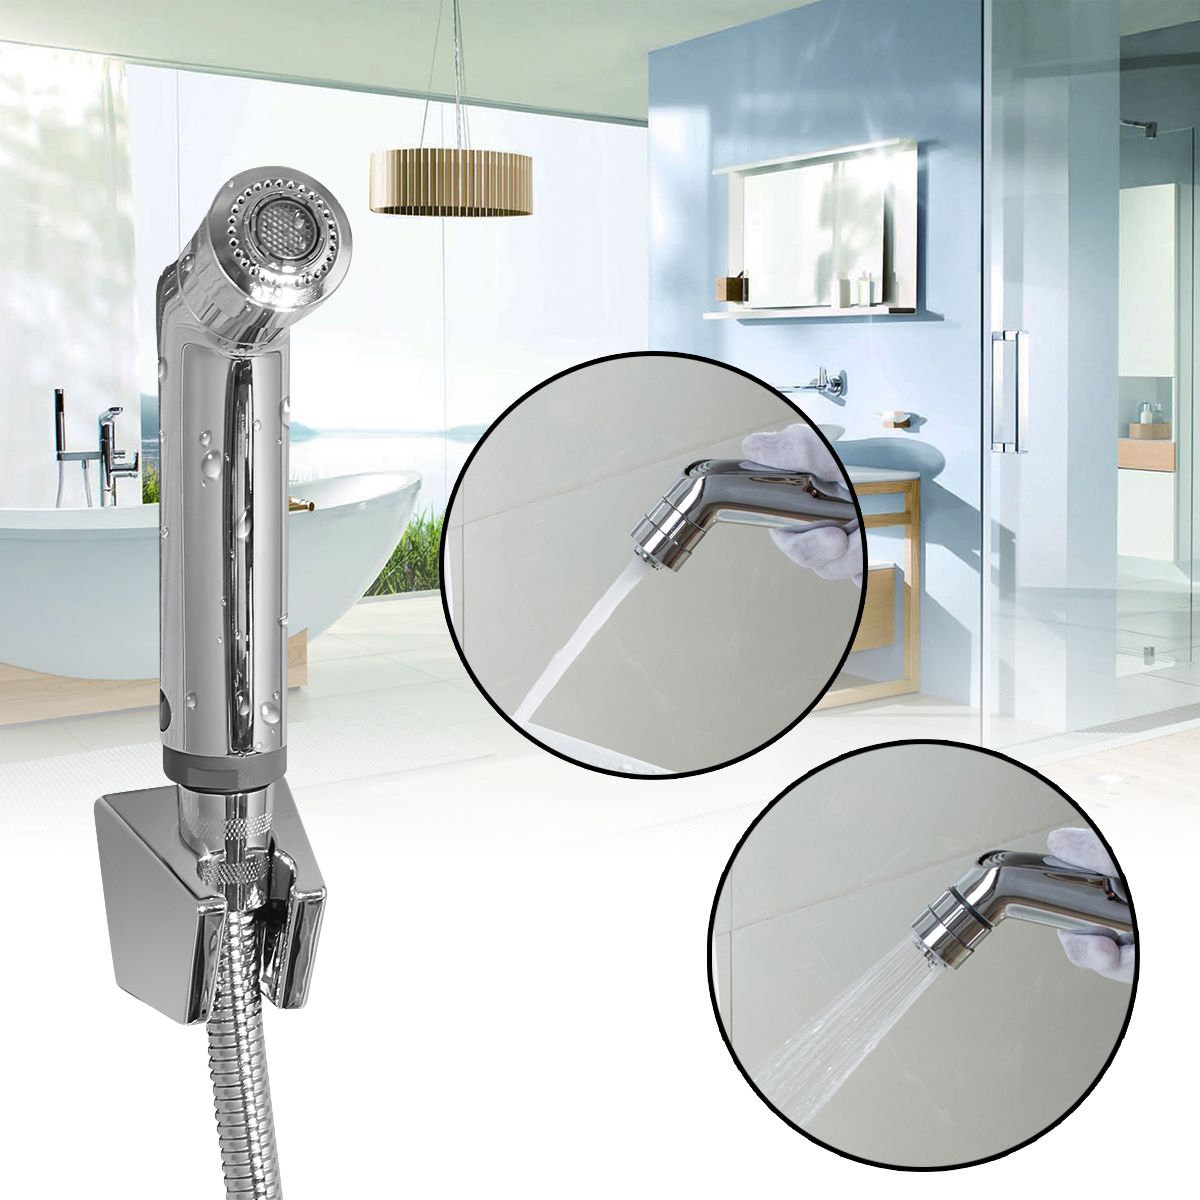 Bathroom-Handheld-Bidet-Toilet-Adapter-Shower-Sprayer-Wall-Bracket-With-Holder-amp-Water-Hose-1345589